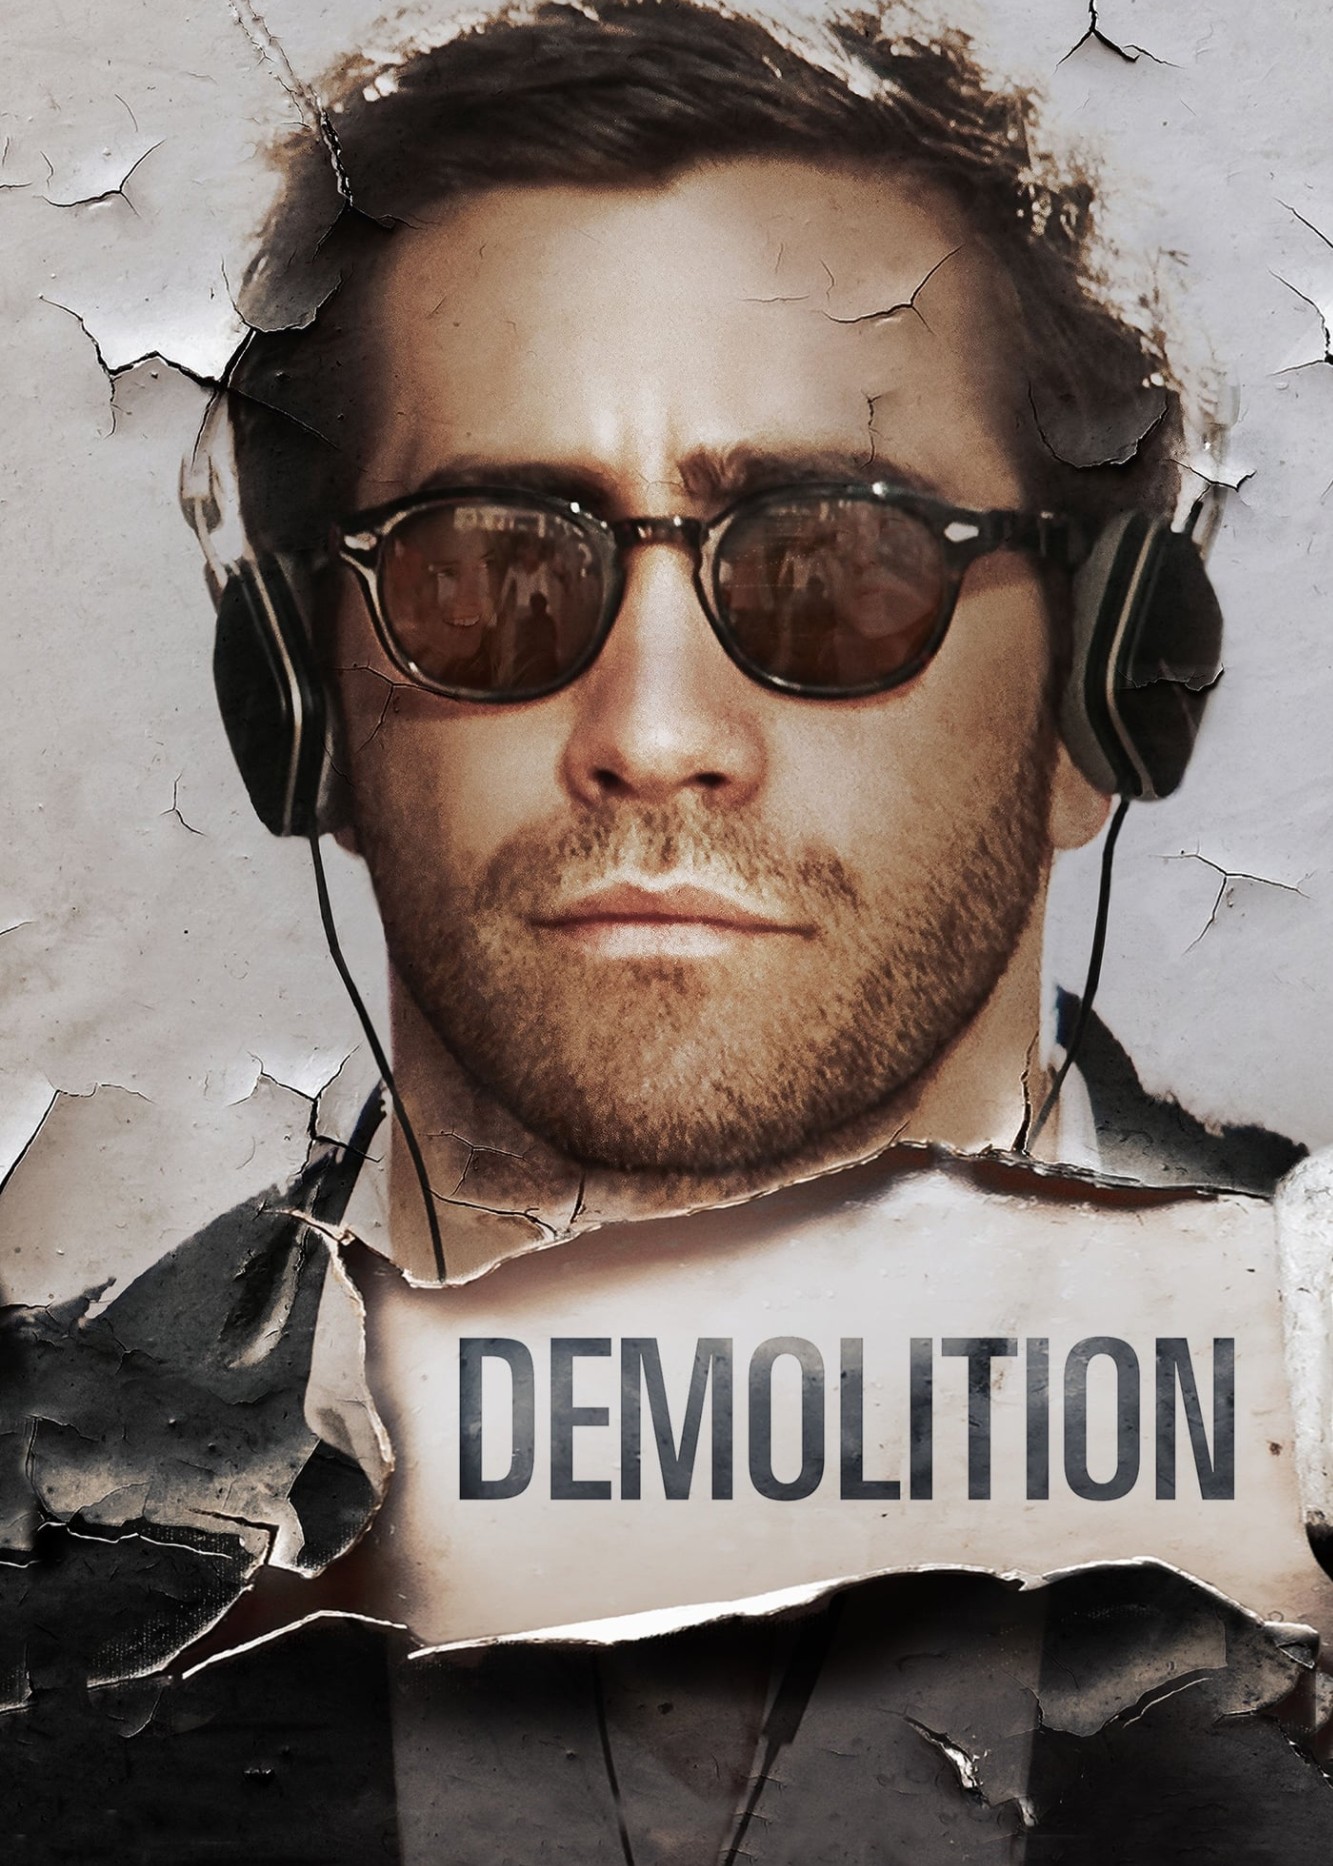 Demolition - Demolition